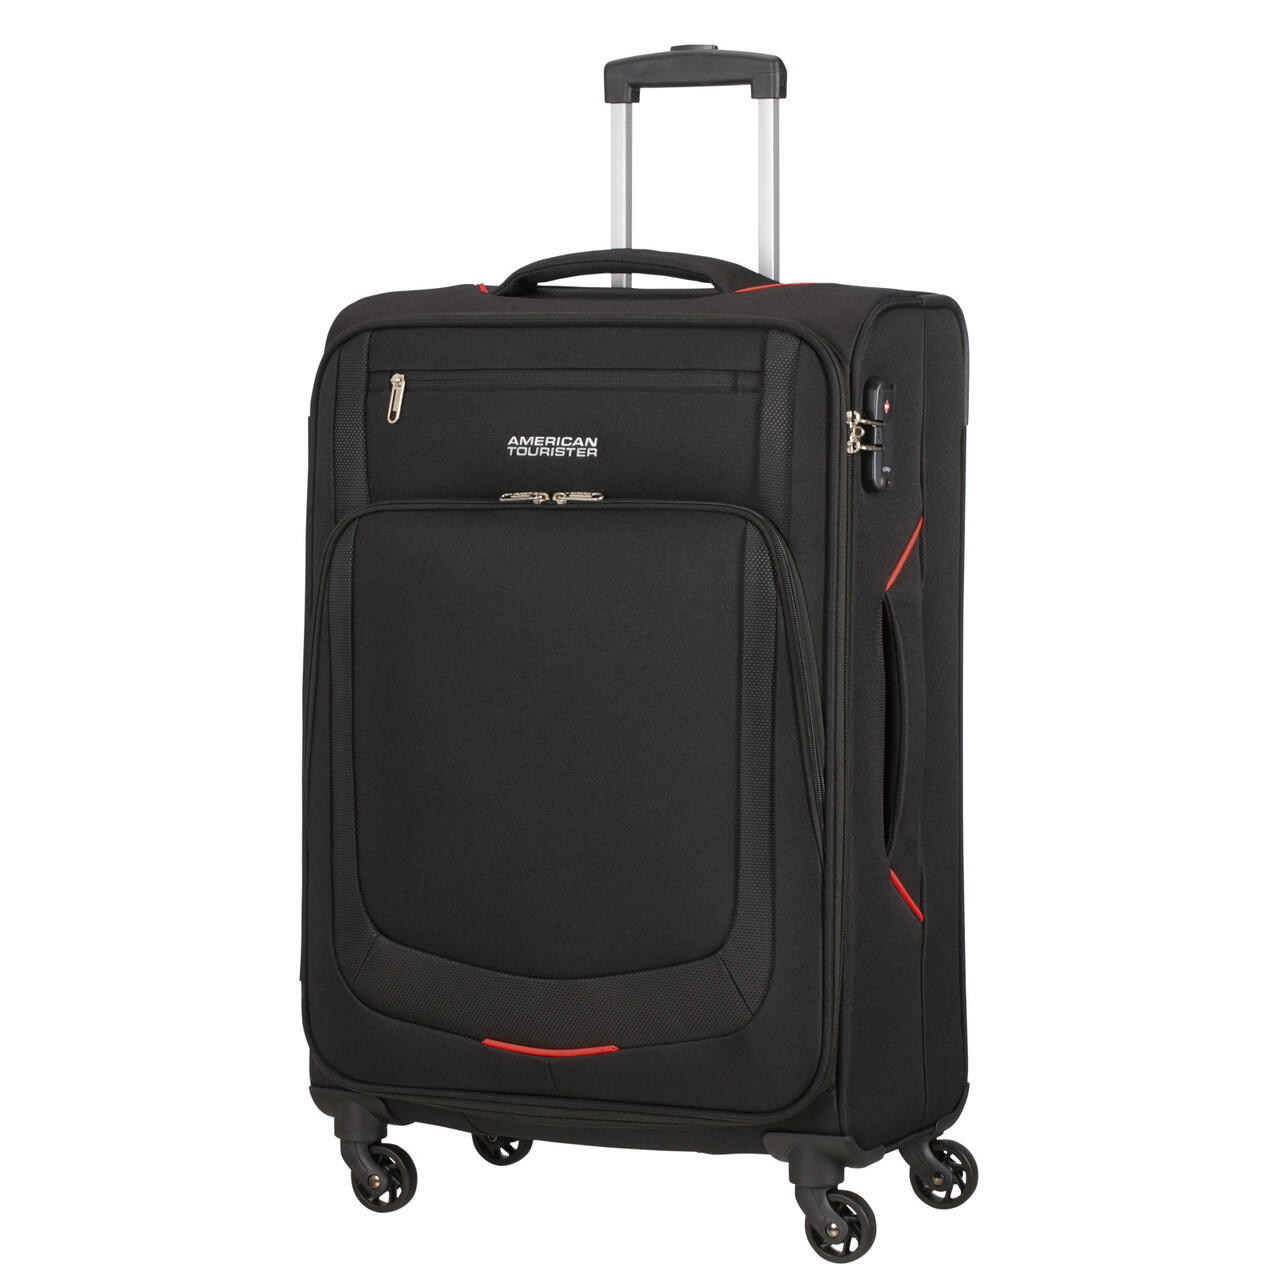 AMERICAN TOURISTER Summer Session Medium Suitcase - 67cm - Black/Red